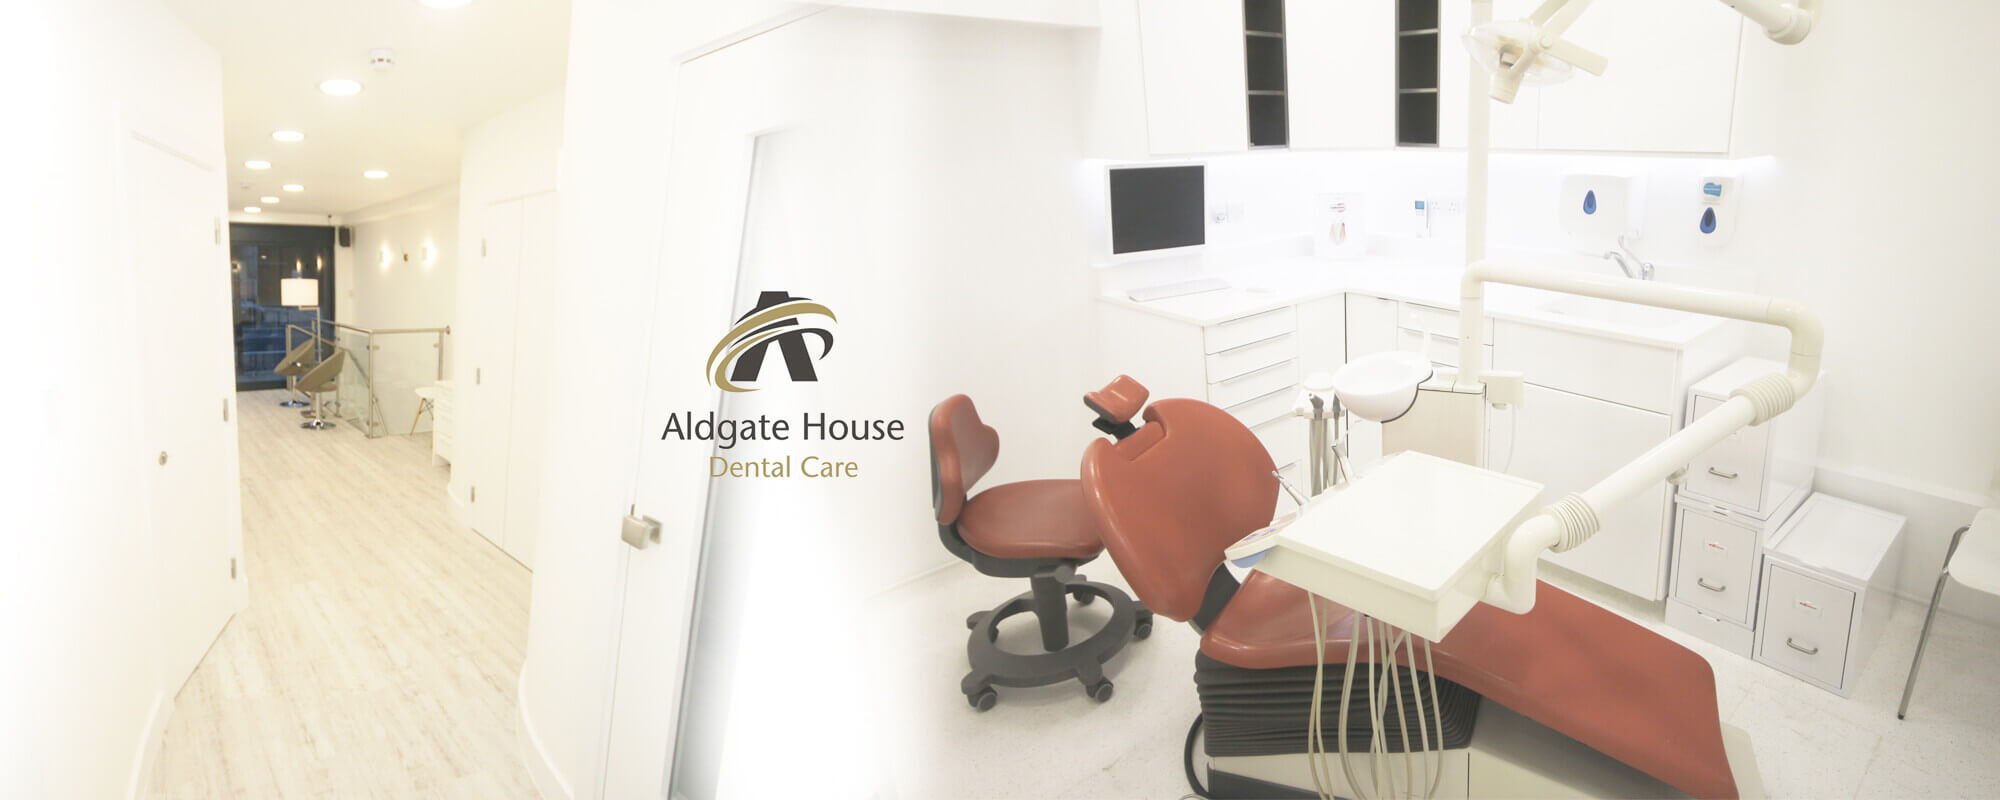 Aldgate House Dental care in London